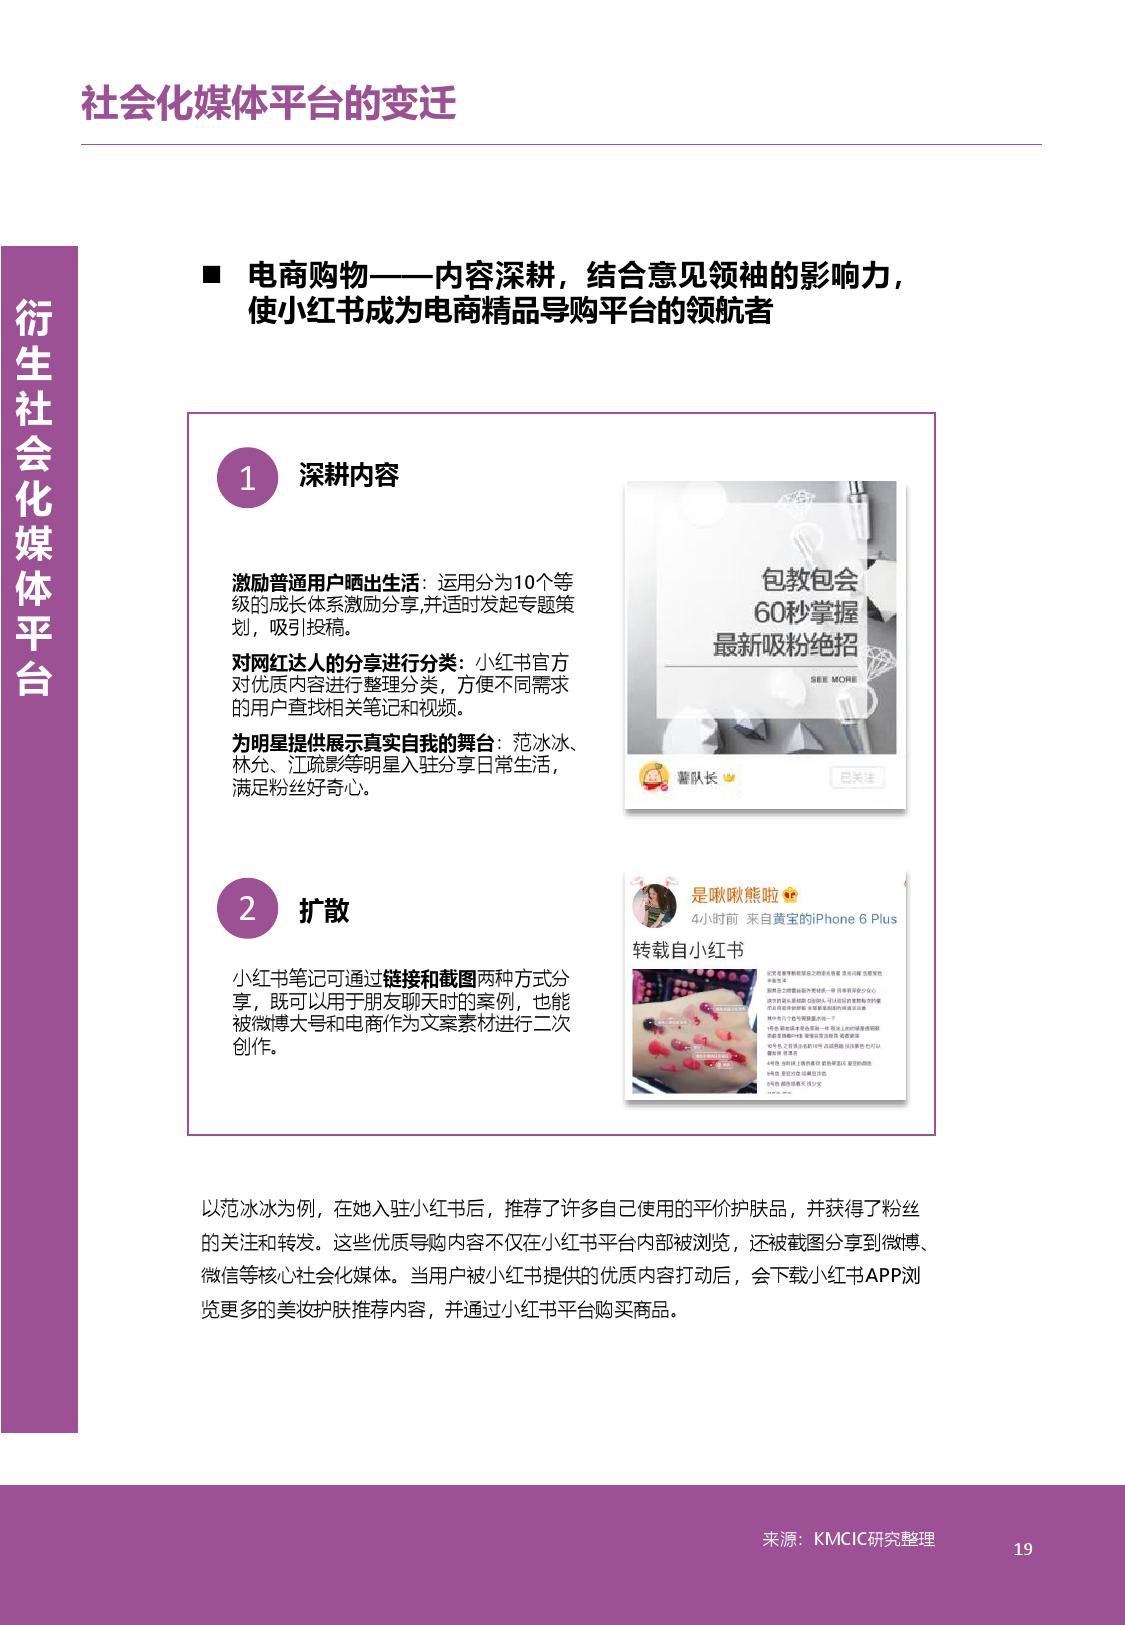 Kantar Media CIC：2018年中国社会化媒体生态概览白皮书 （199it）